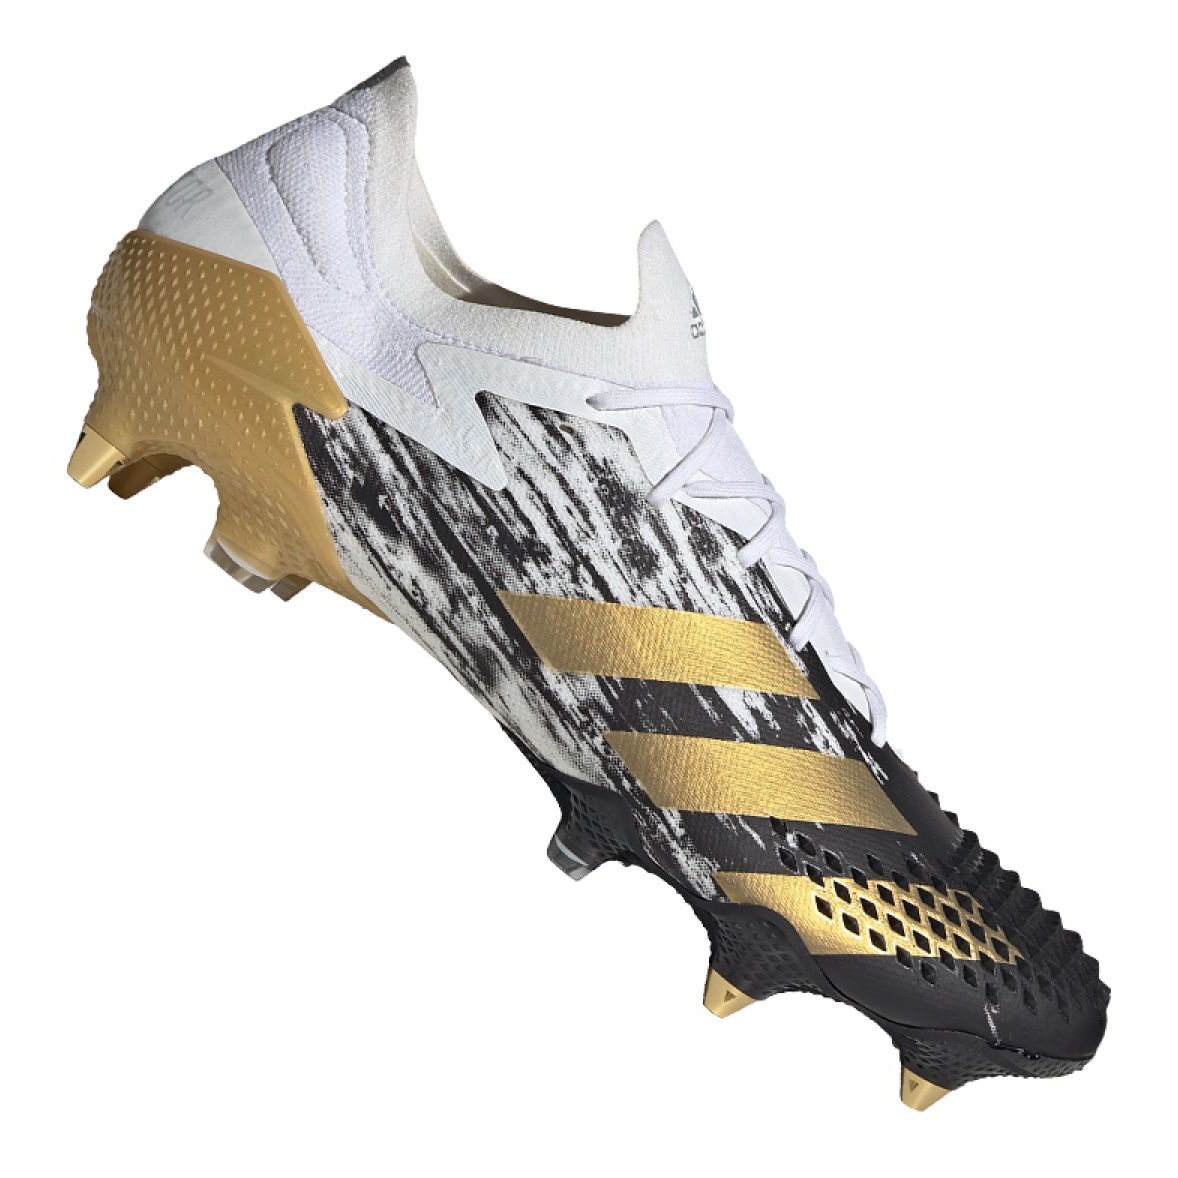 Adidas Predator 20.1 Sg M FW9181 football boots white black, white, black, gold - KeeShoes